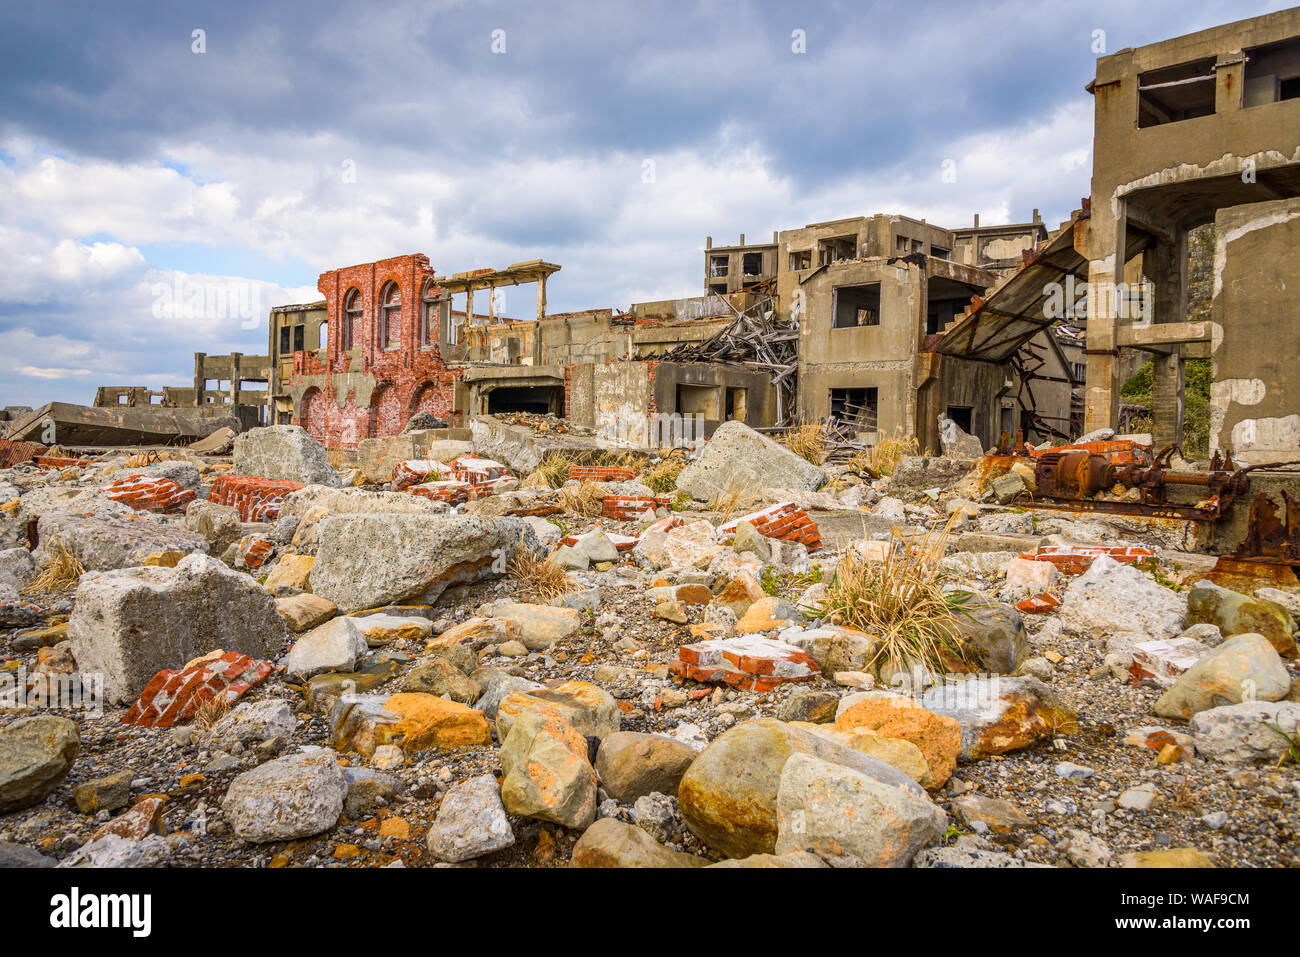 Ruins on the abandoned island of Gunkanjima off the coast of Nagasaki Prefecture, Japan. Stock Photo